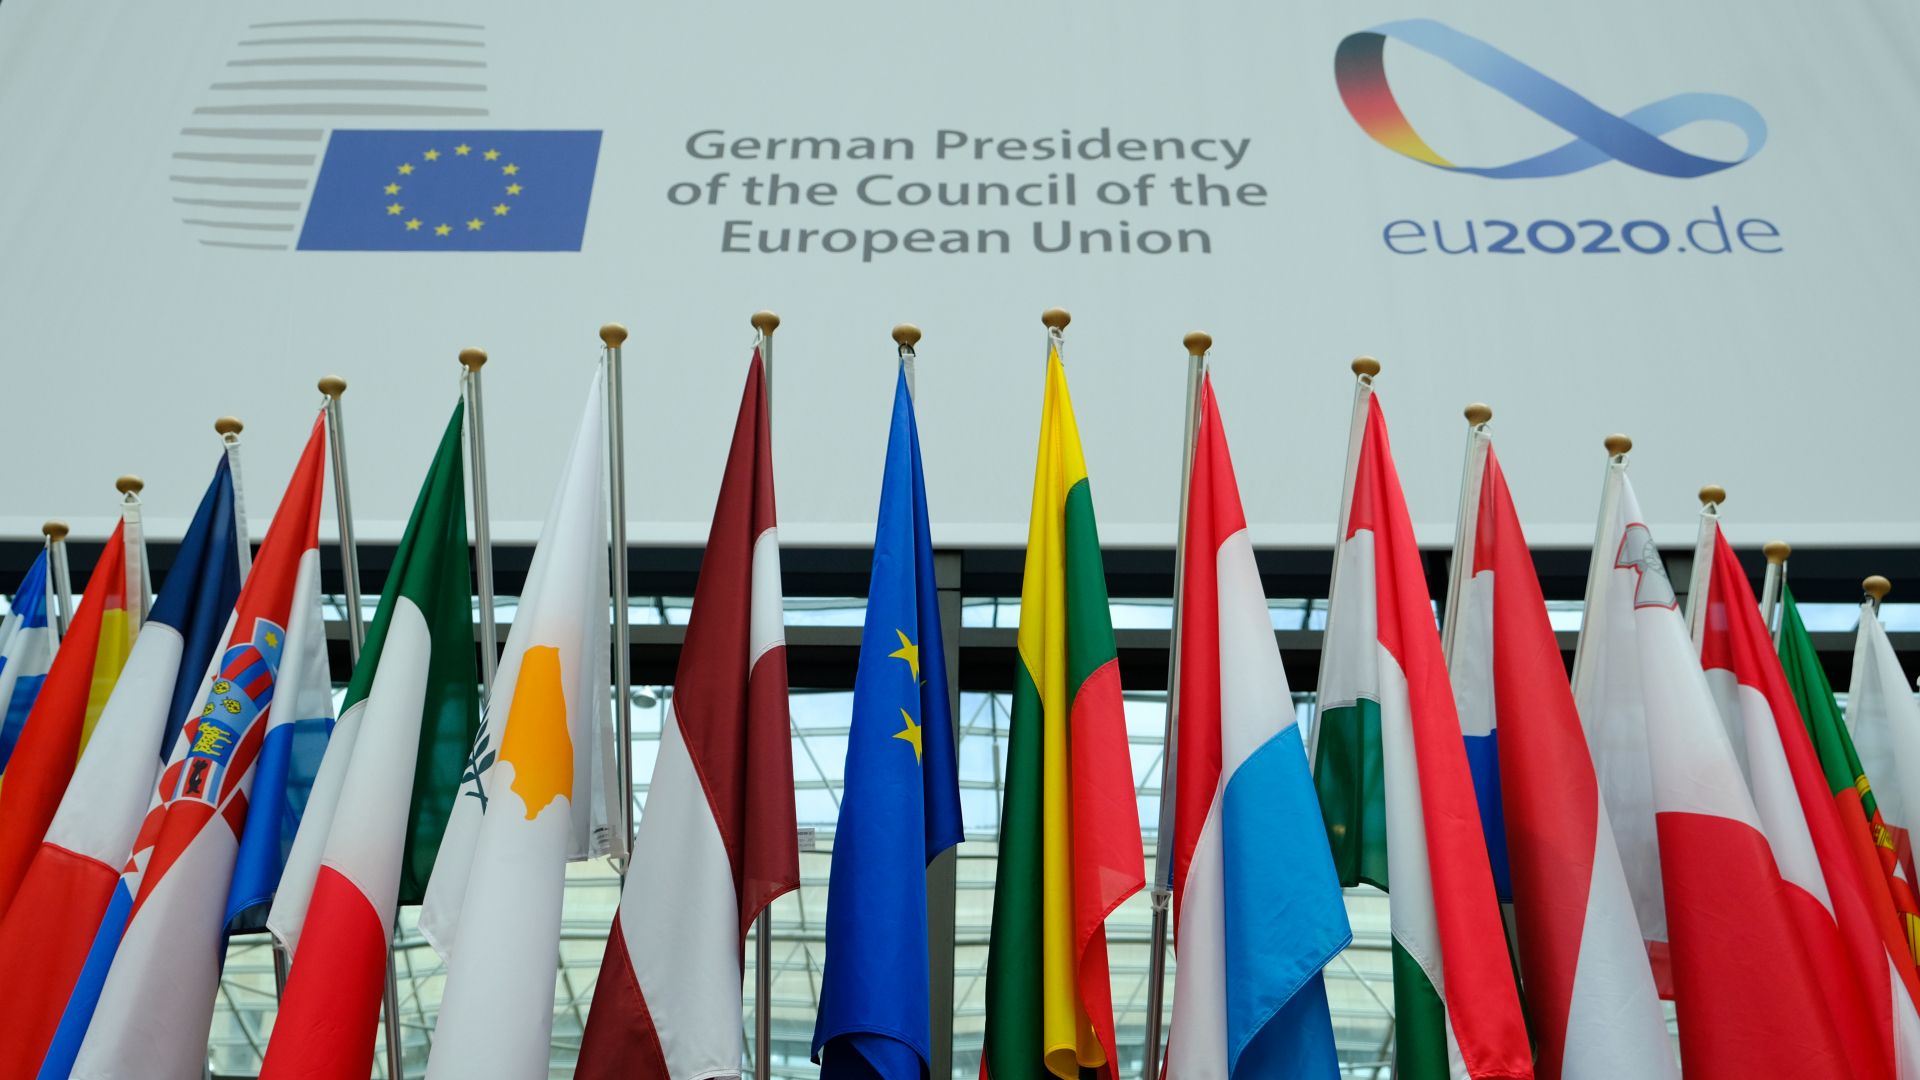 german presidency logo